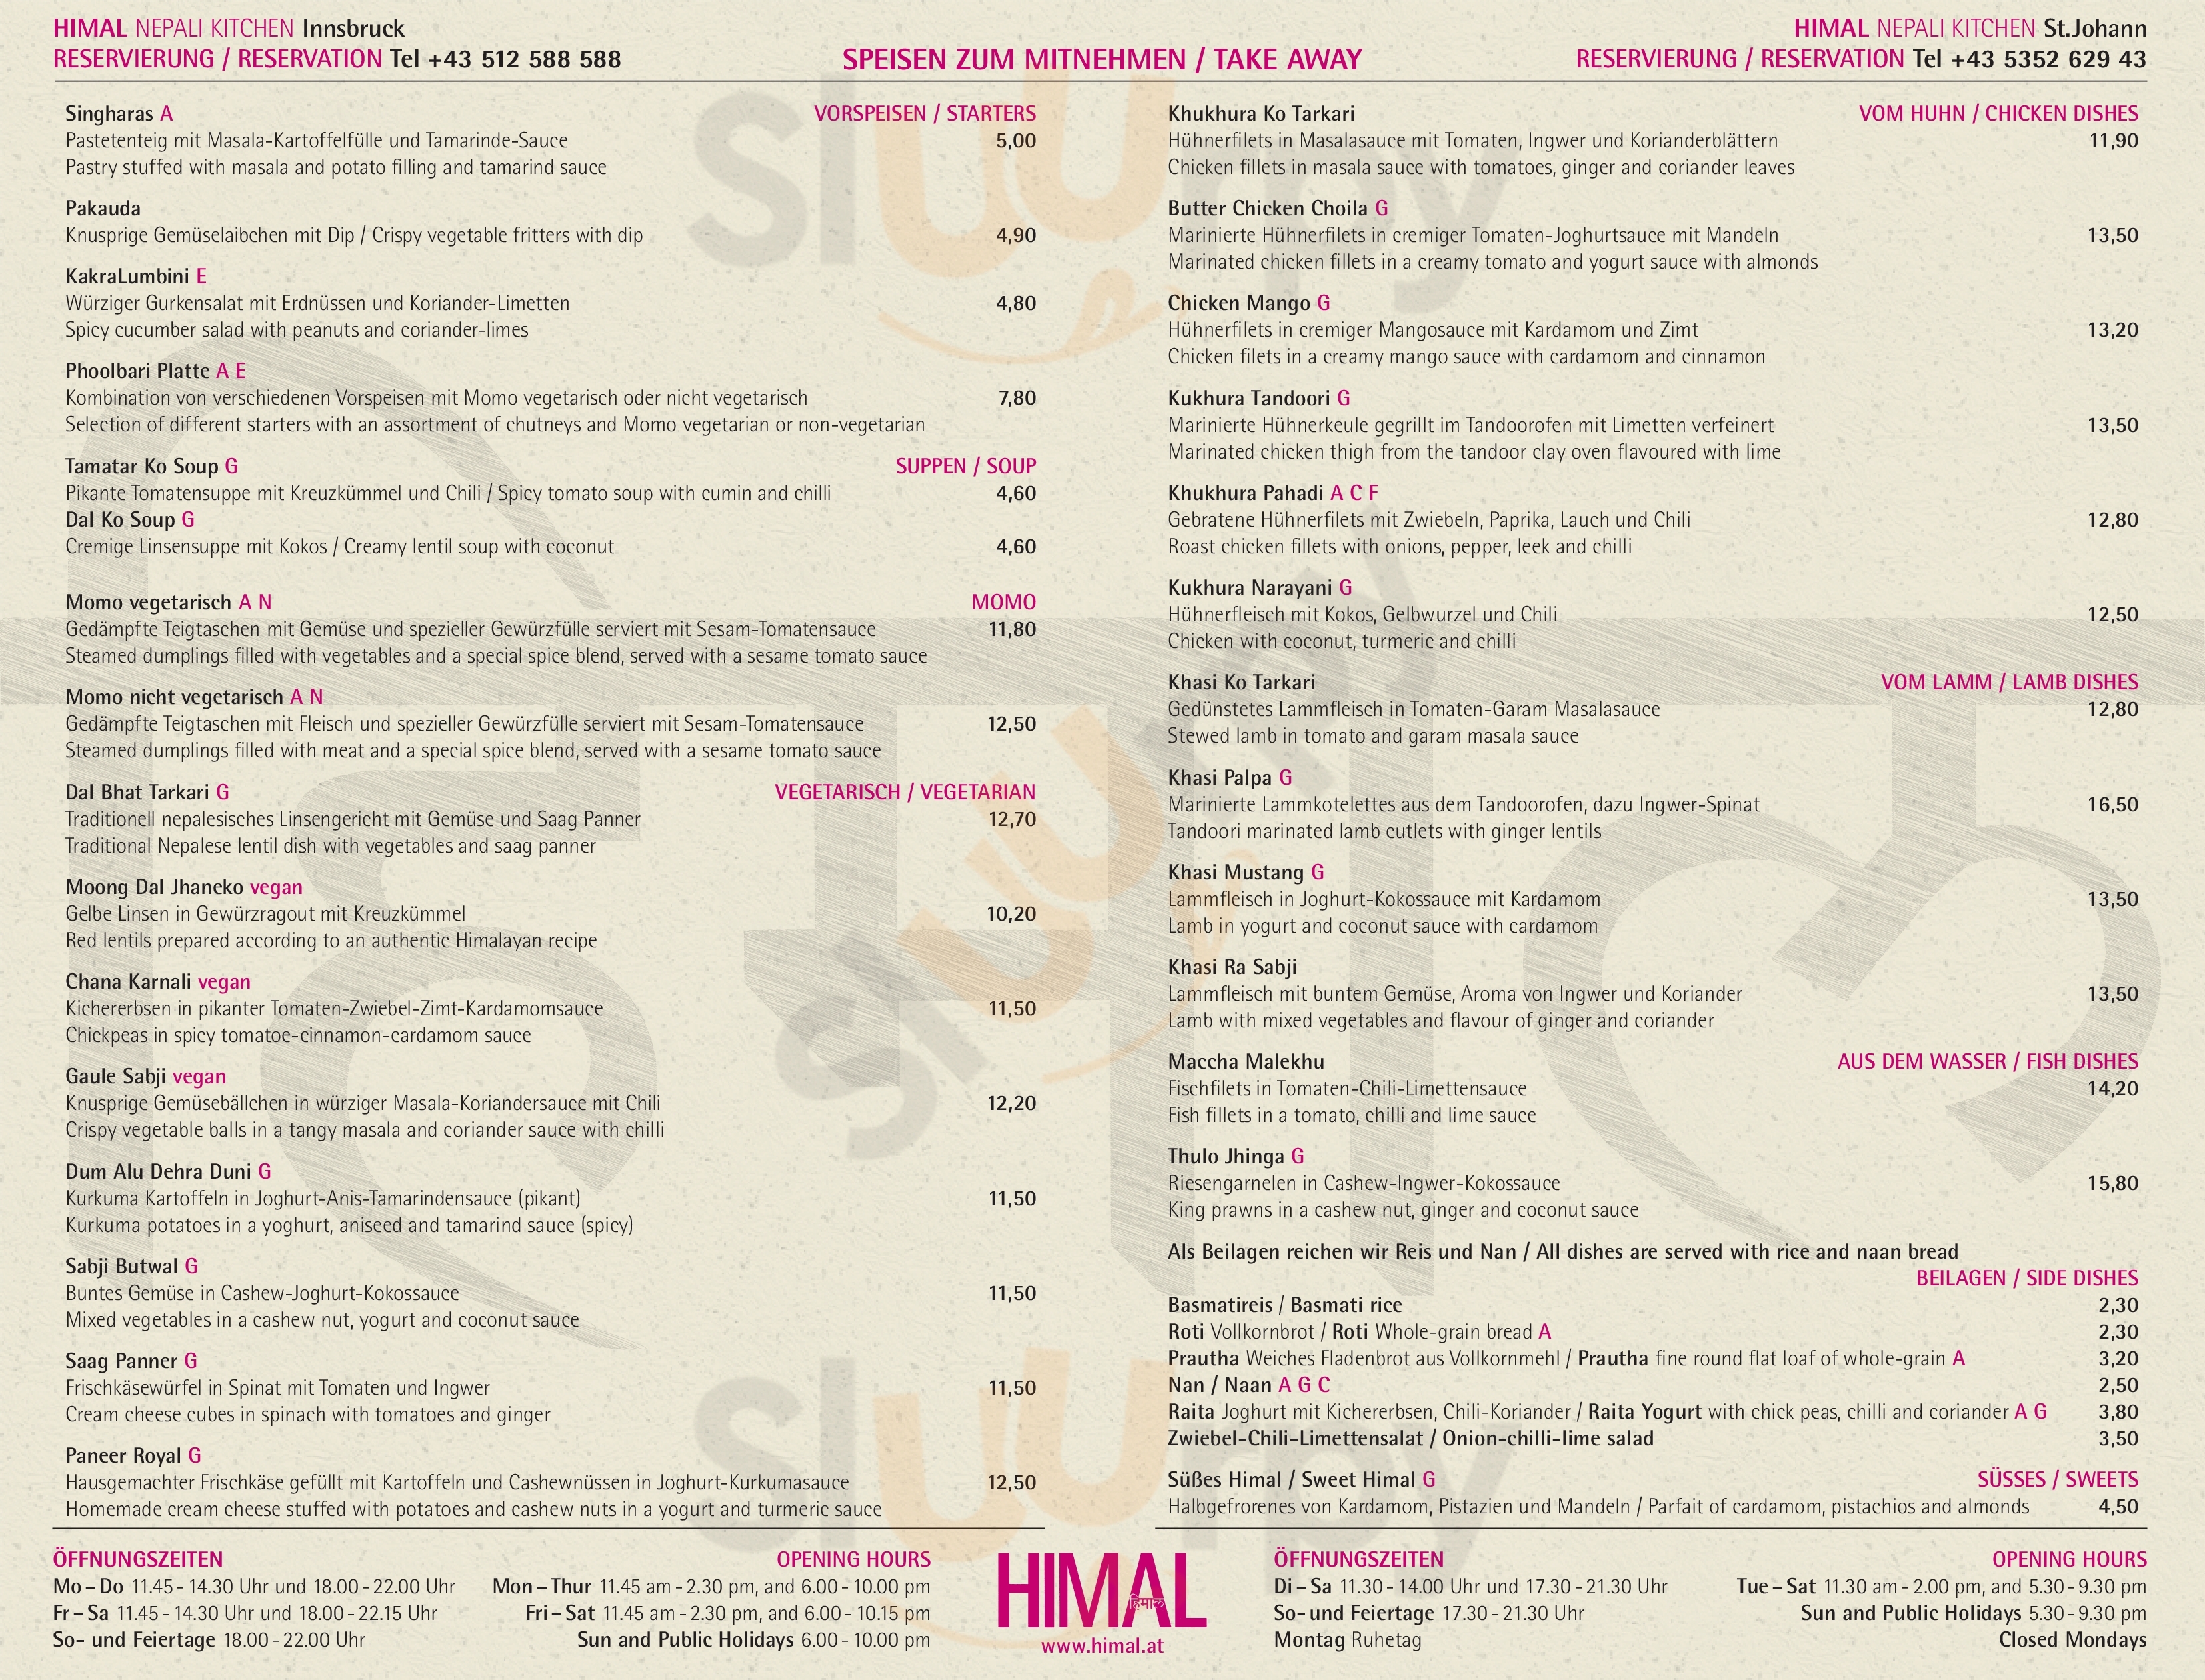 Himal Nepal Kitchen Innsbruck Menu - 1